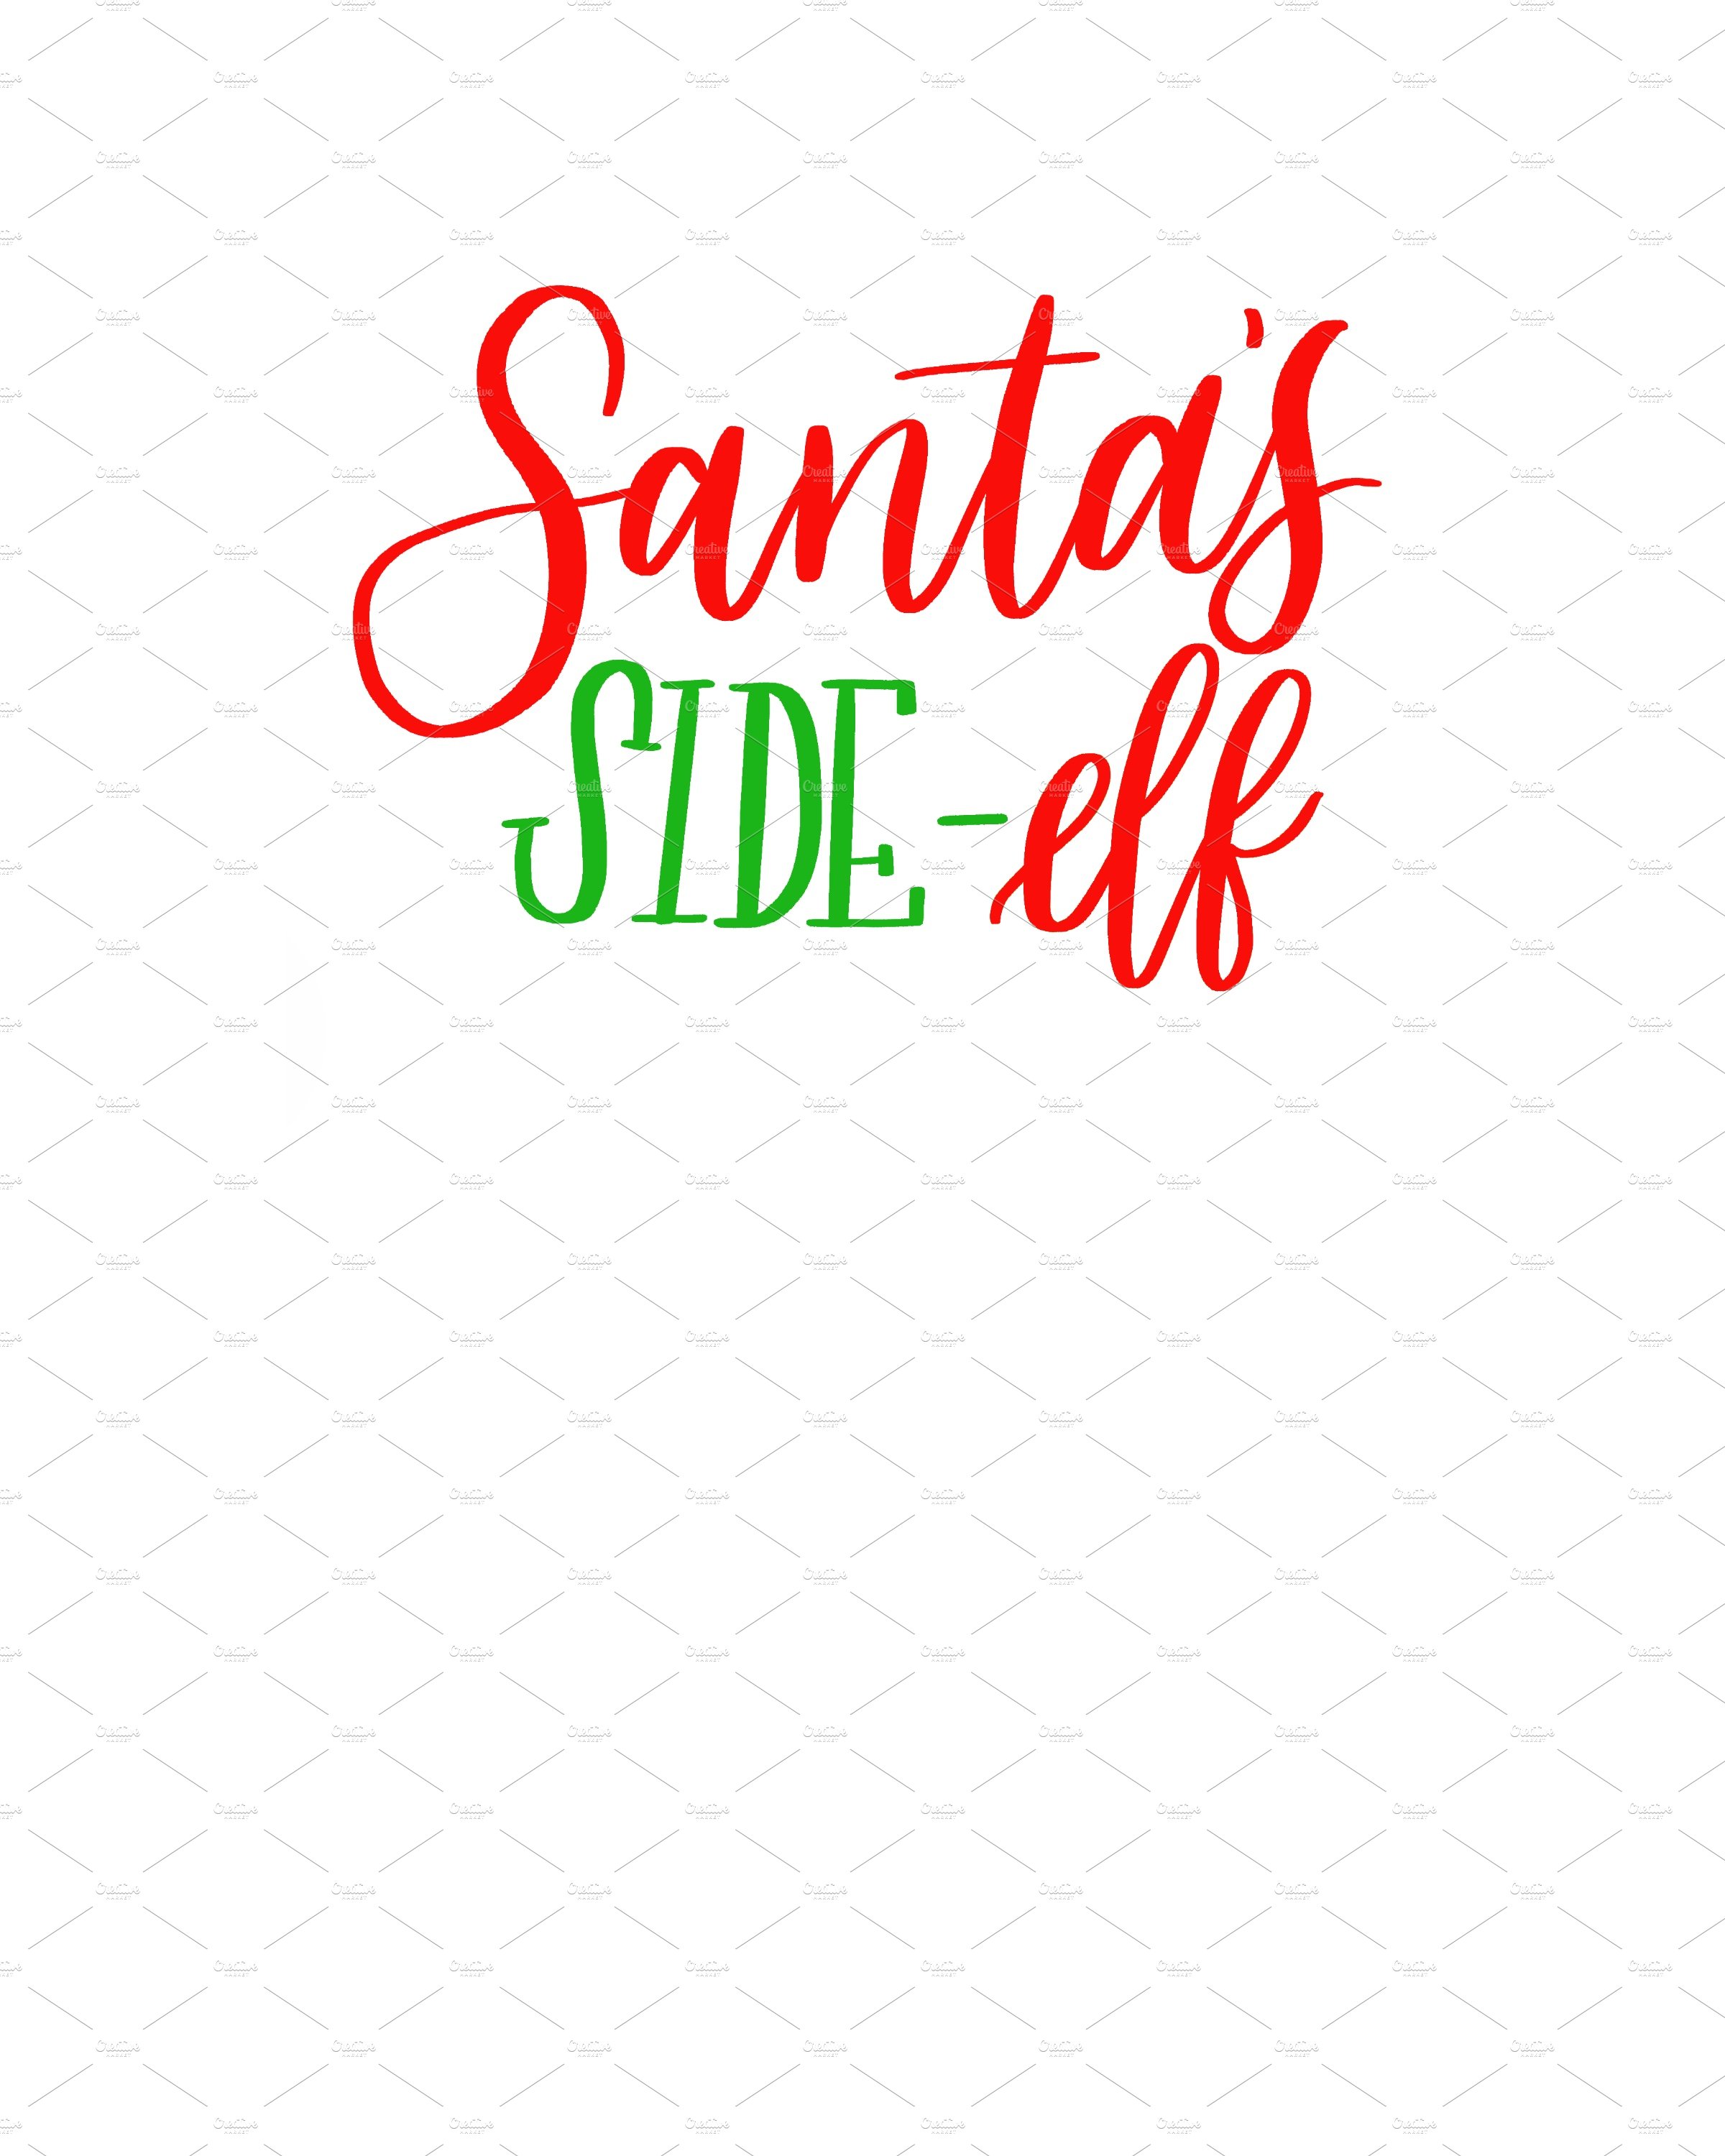 Santa’s Side Elf cut filecover image.